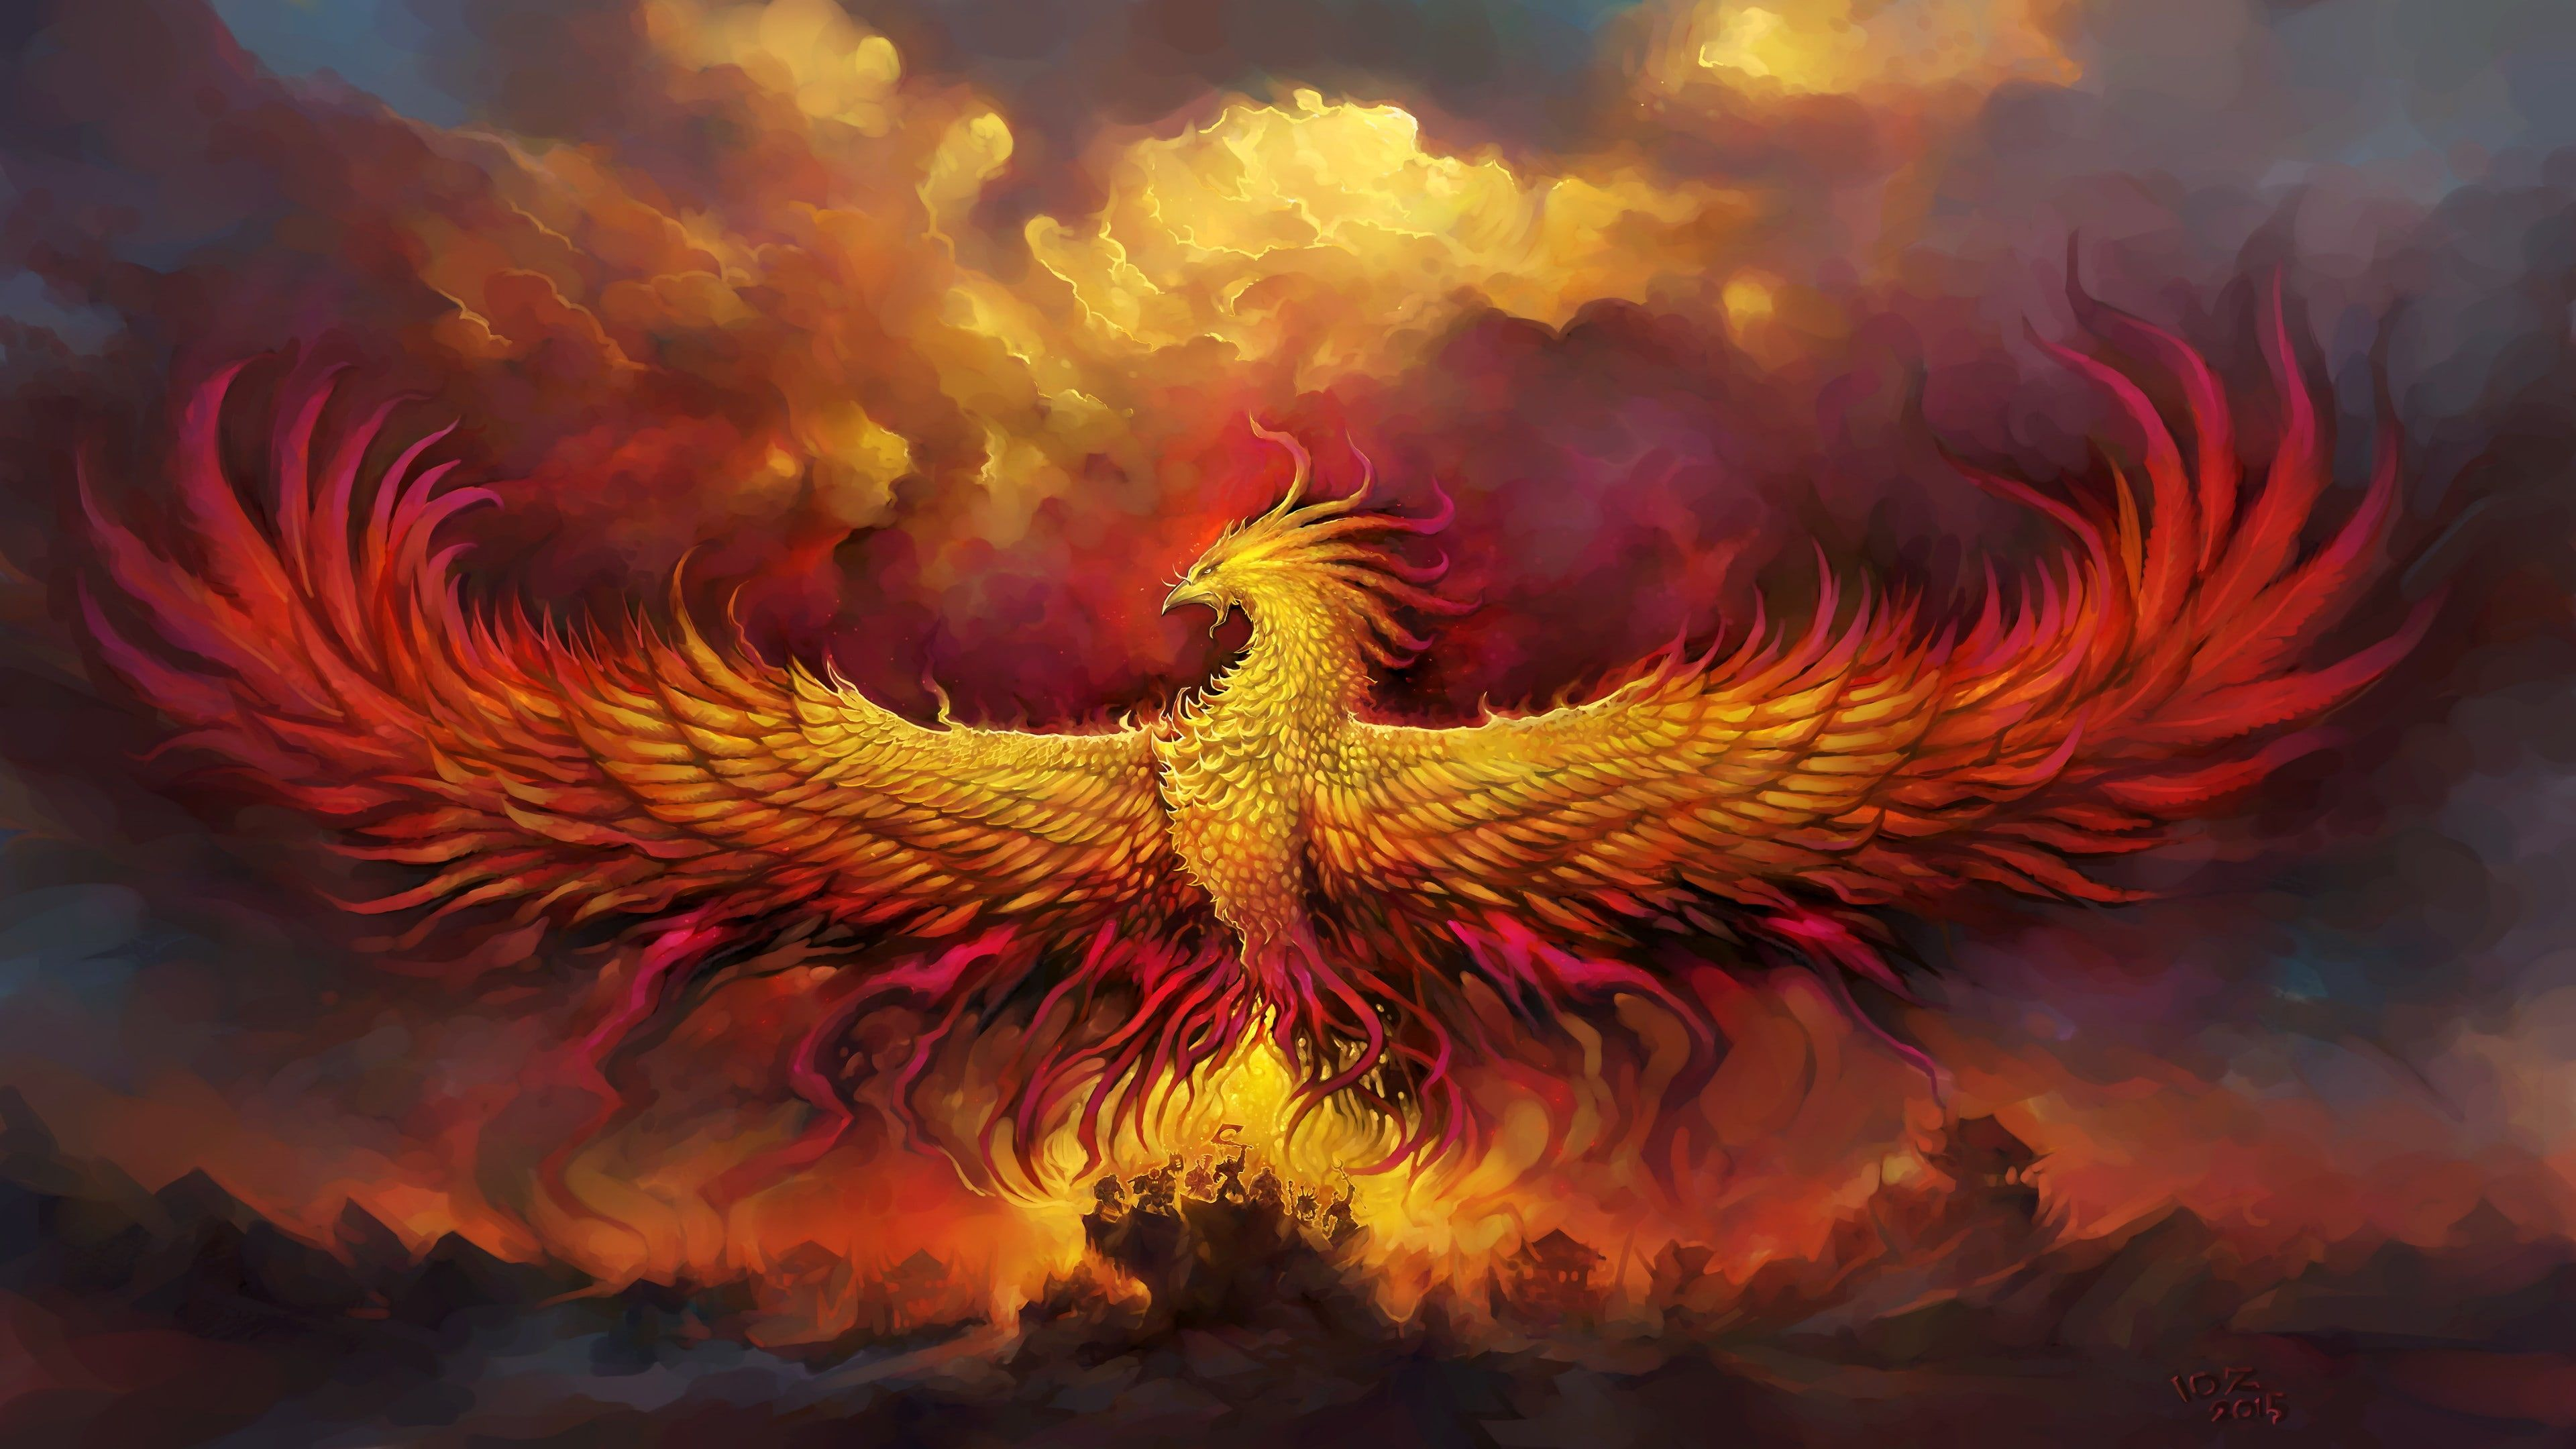 3840x2160 sky #fire #flame fantasy art #phoenix phoenix bird #mythology #artwork #4K # wallpaper #hdwallpaper #desktop | Phoenix wallpaper, Diamond painting, Cool paintings